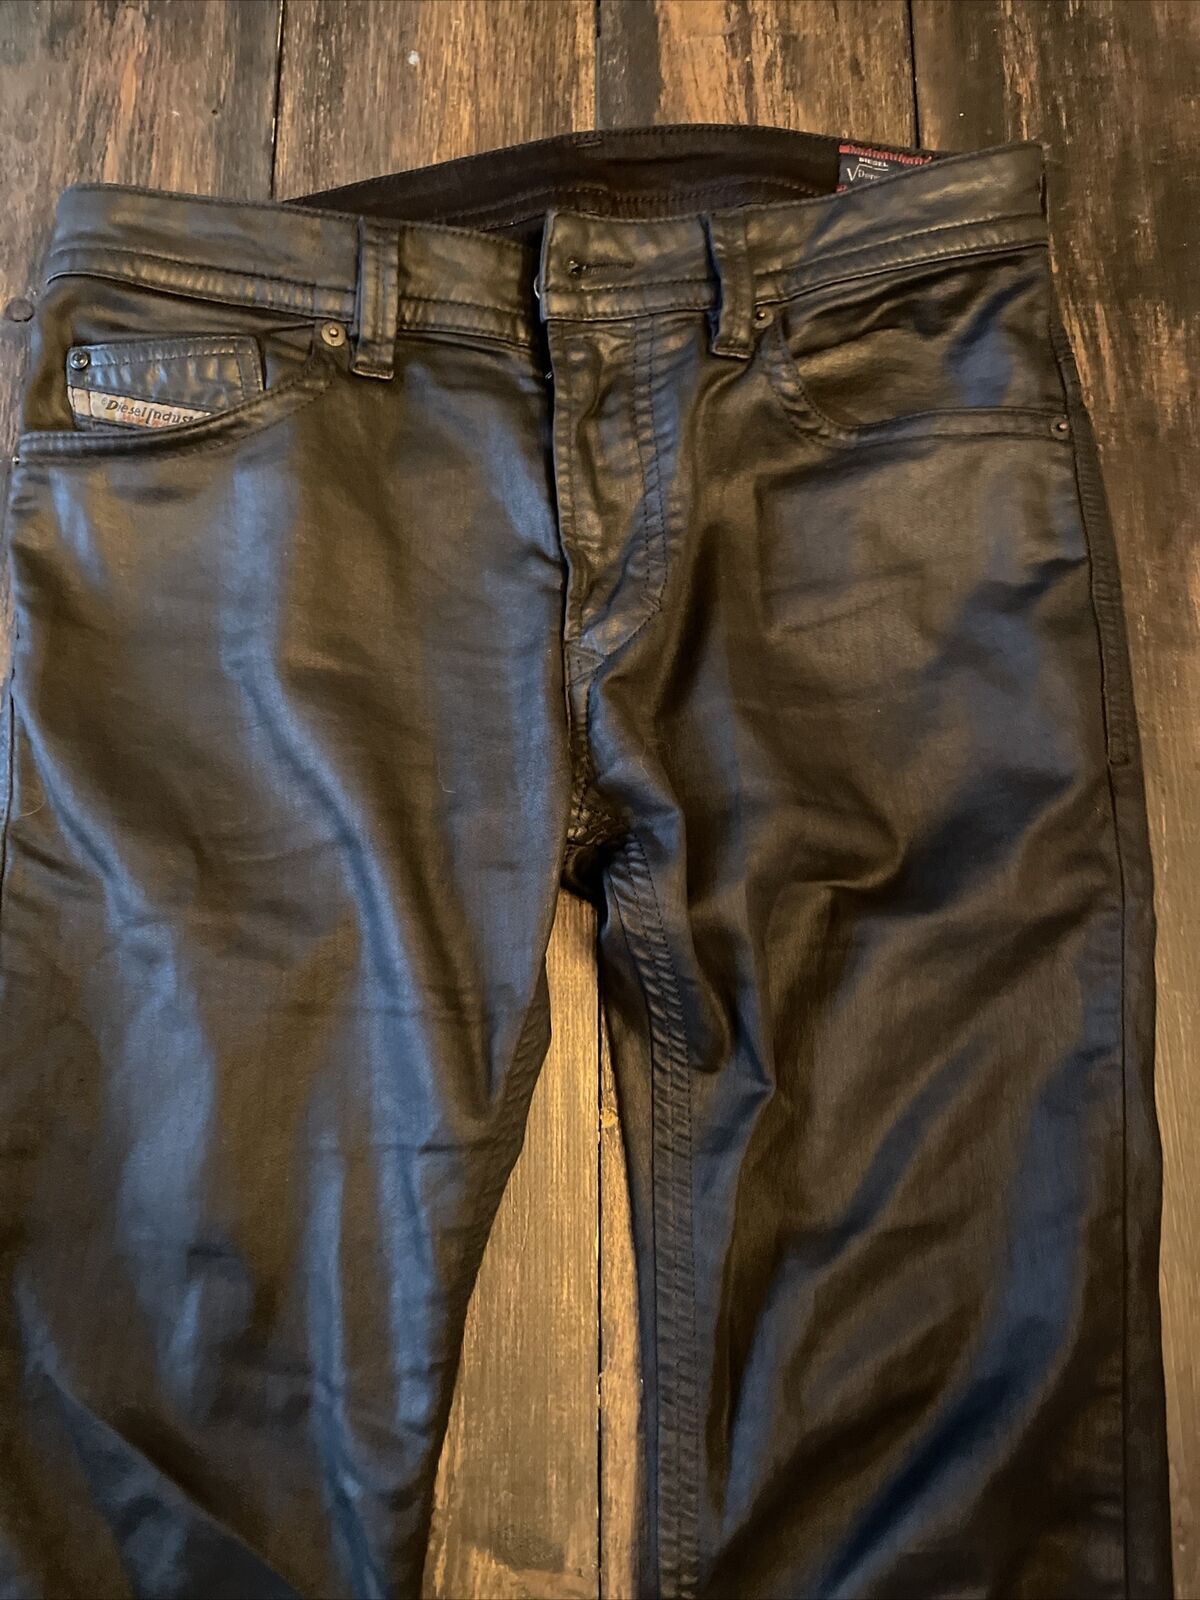 Commotie Kliniek toilet Diesel Men's Jeans 28/32 Thavar Jog Jeans Black Coated | eBay